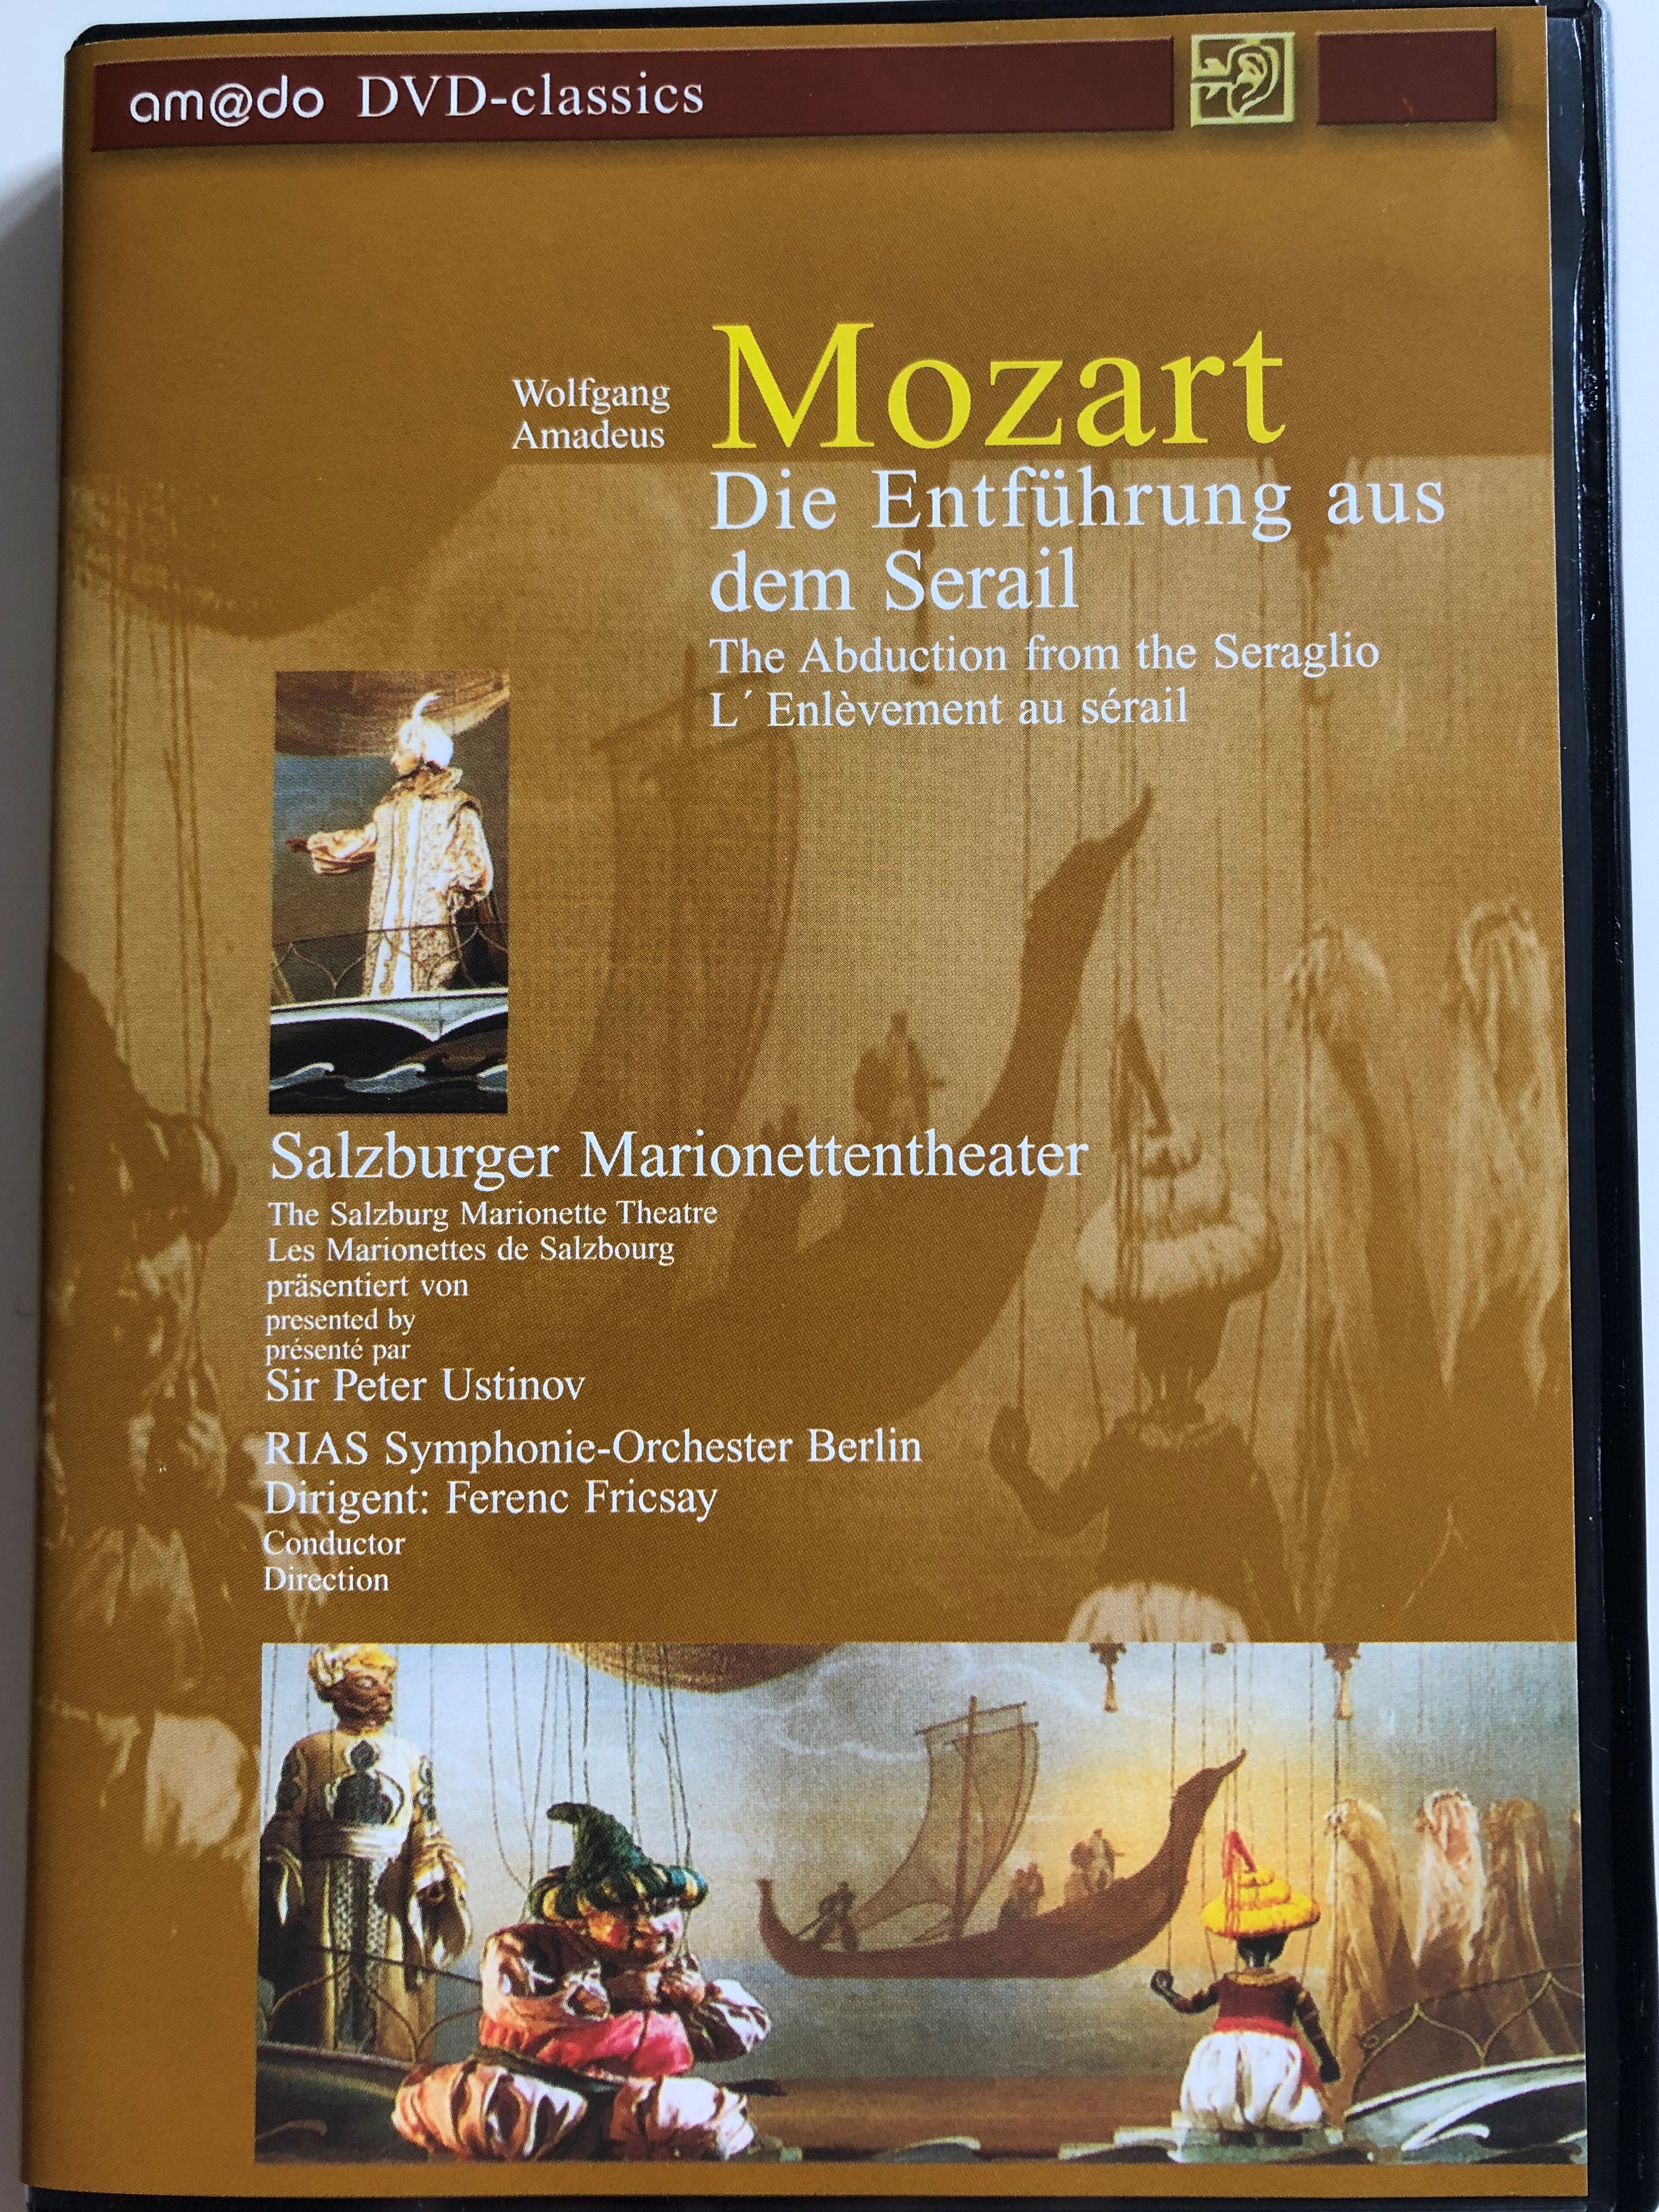 w.a.-mozart-die-entf-hrung-aus-dem-serail-dvd-2001-the-abduction-from-the-seraglio-l-enl-vement-au-s-rail-the-salzburg-marionette-theatre-rias-berlin-symphony-orchestra-conductor-ferenc-fricsay-am-do-dvd-classics-1-.jpg